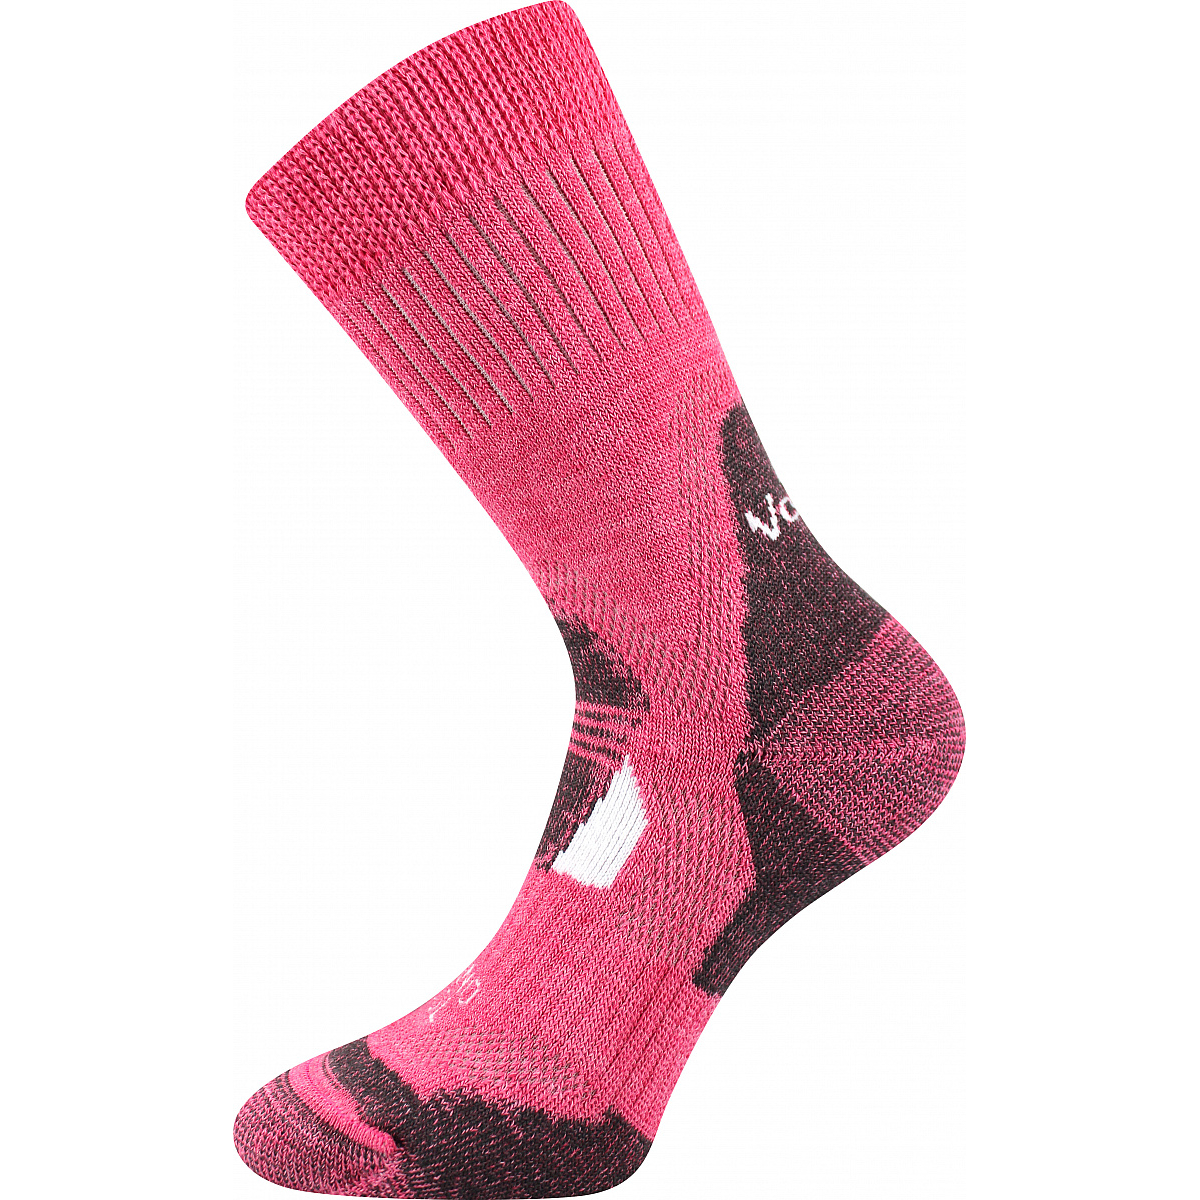 Extra teplé vlněné ponožky Voxx Stabil - růžové, 35-38